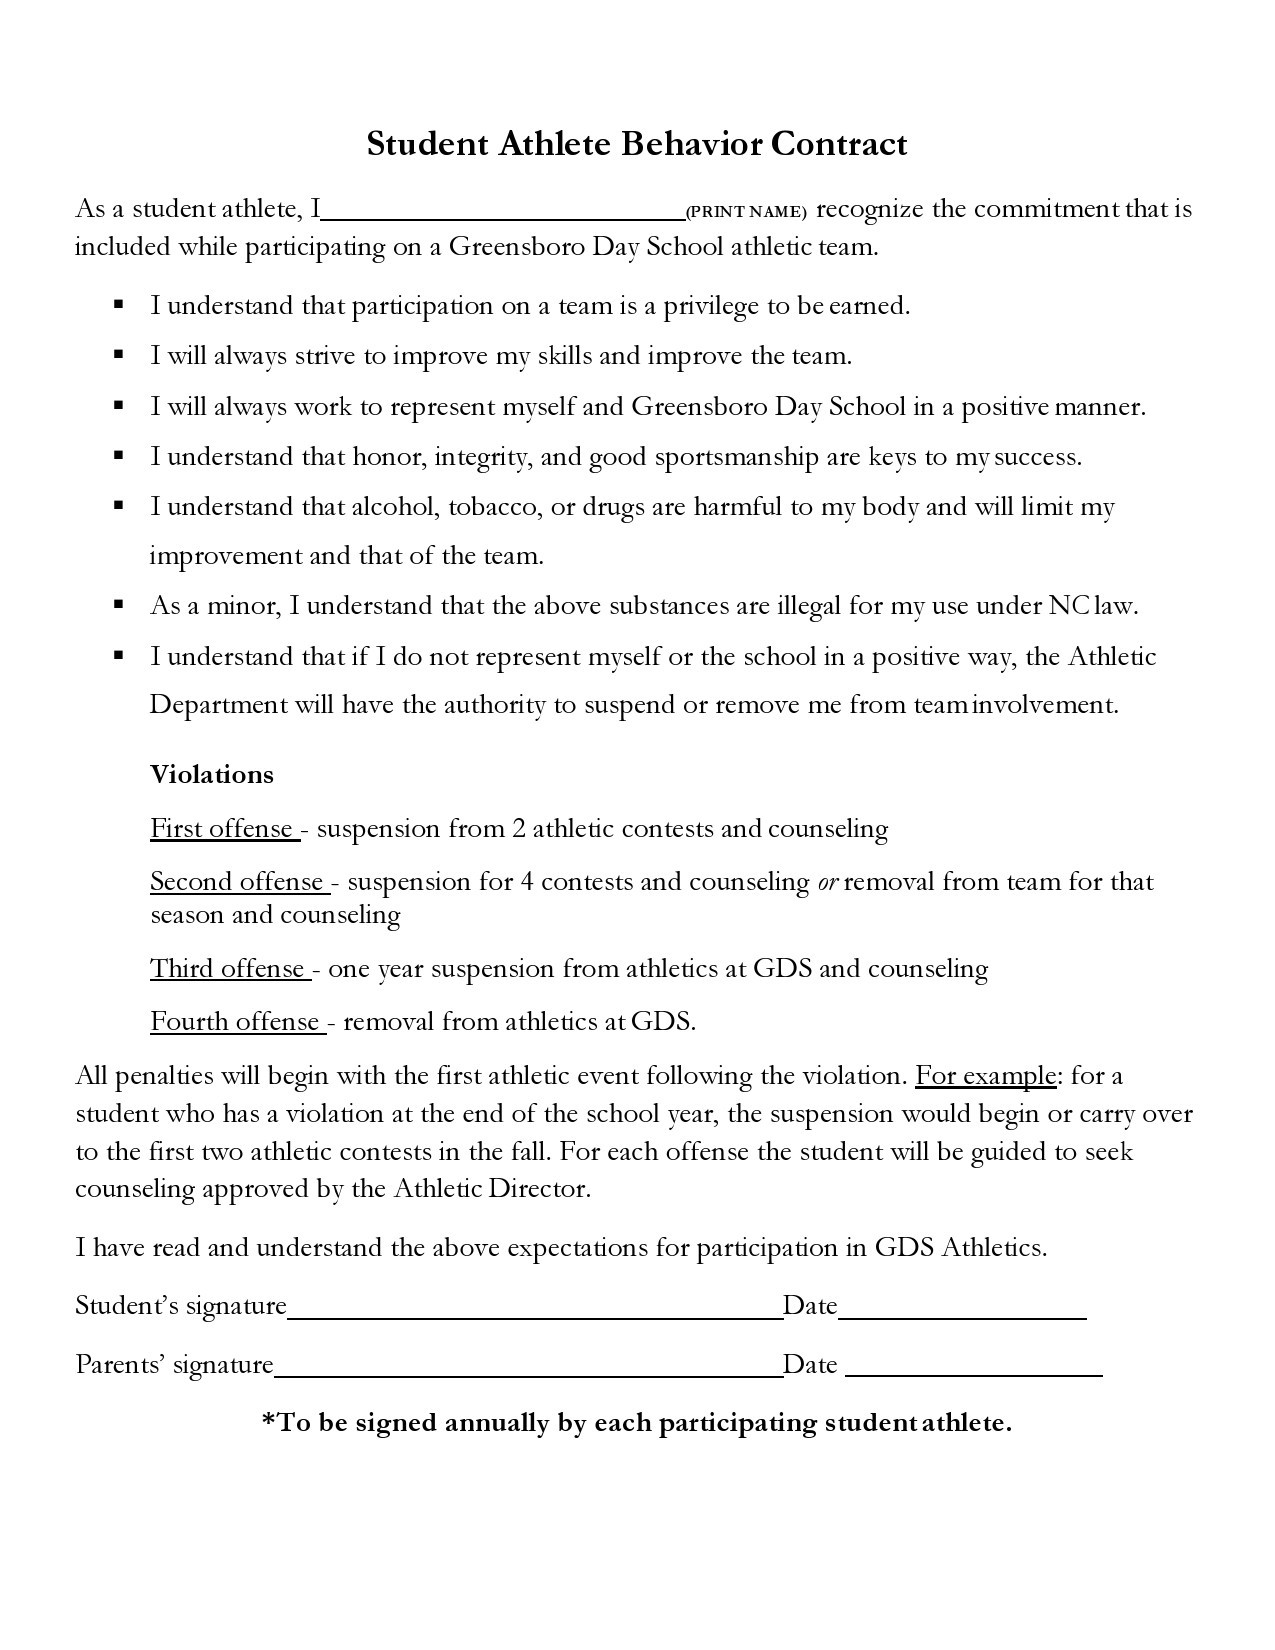 Free behavior contract template 31